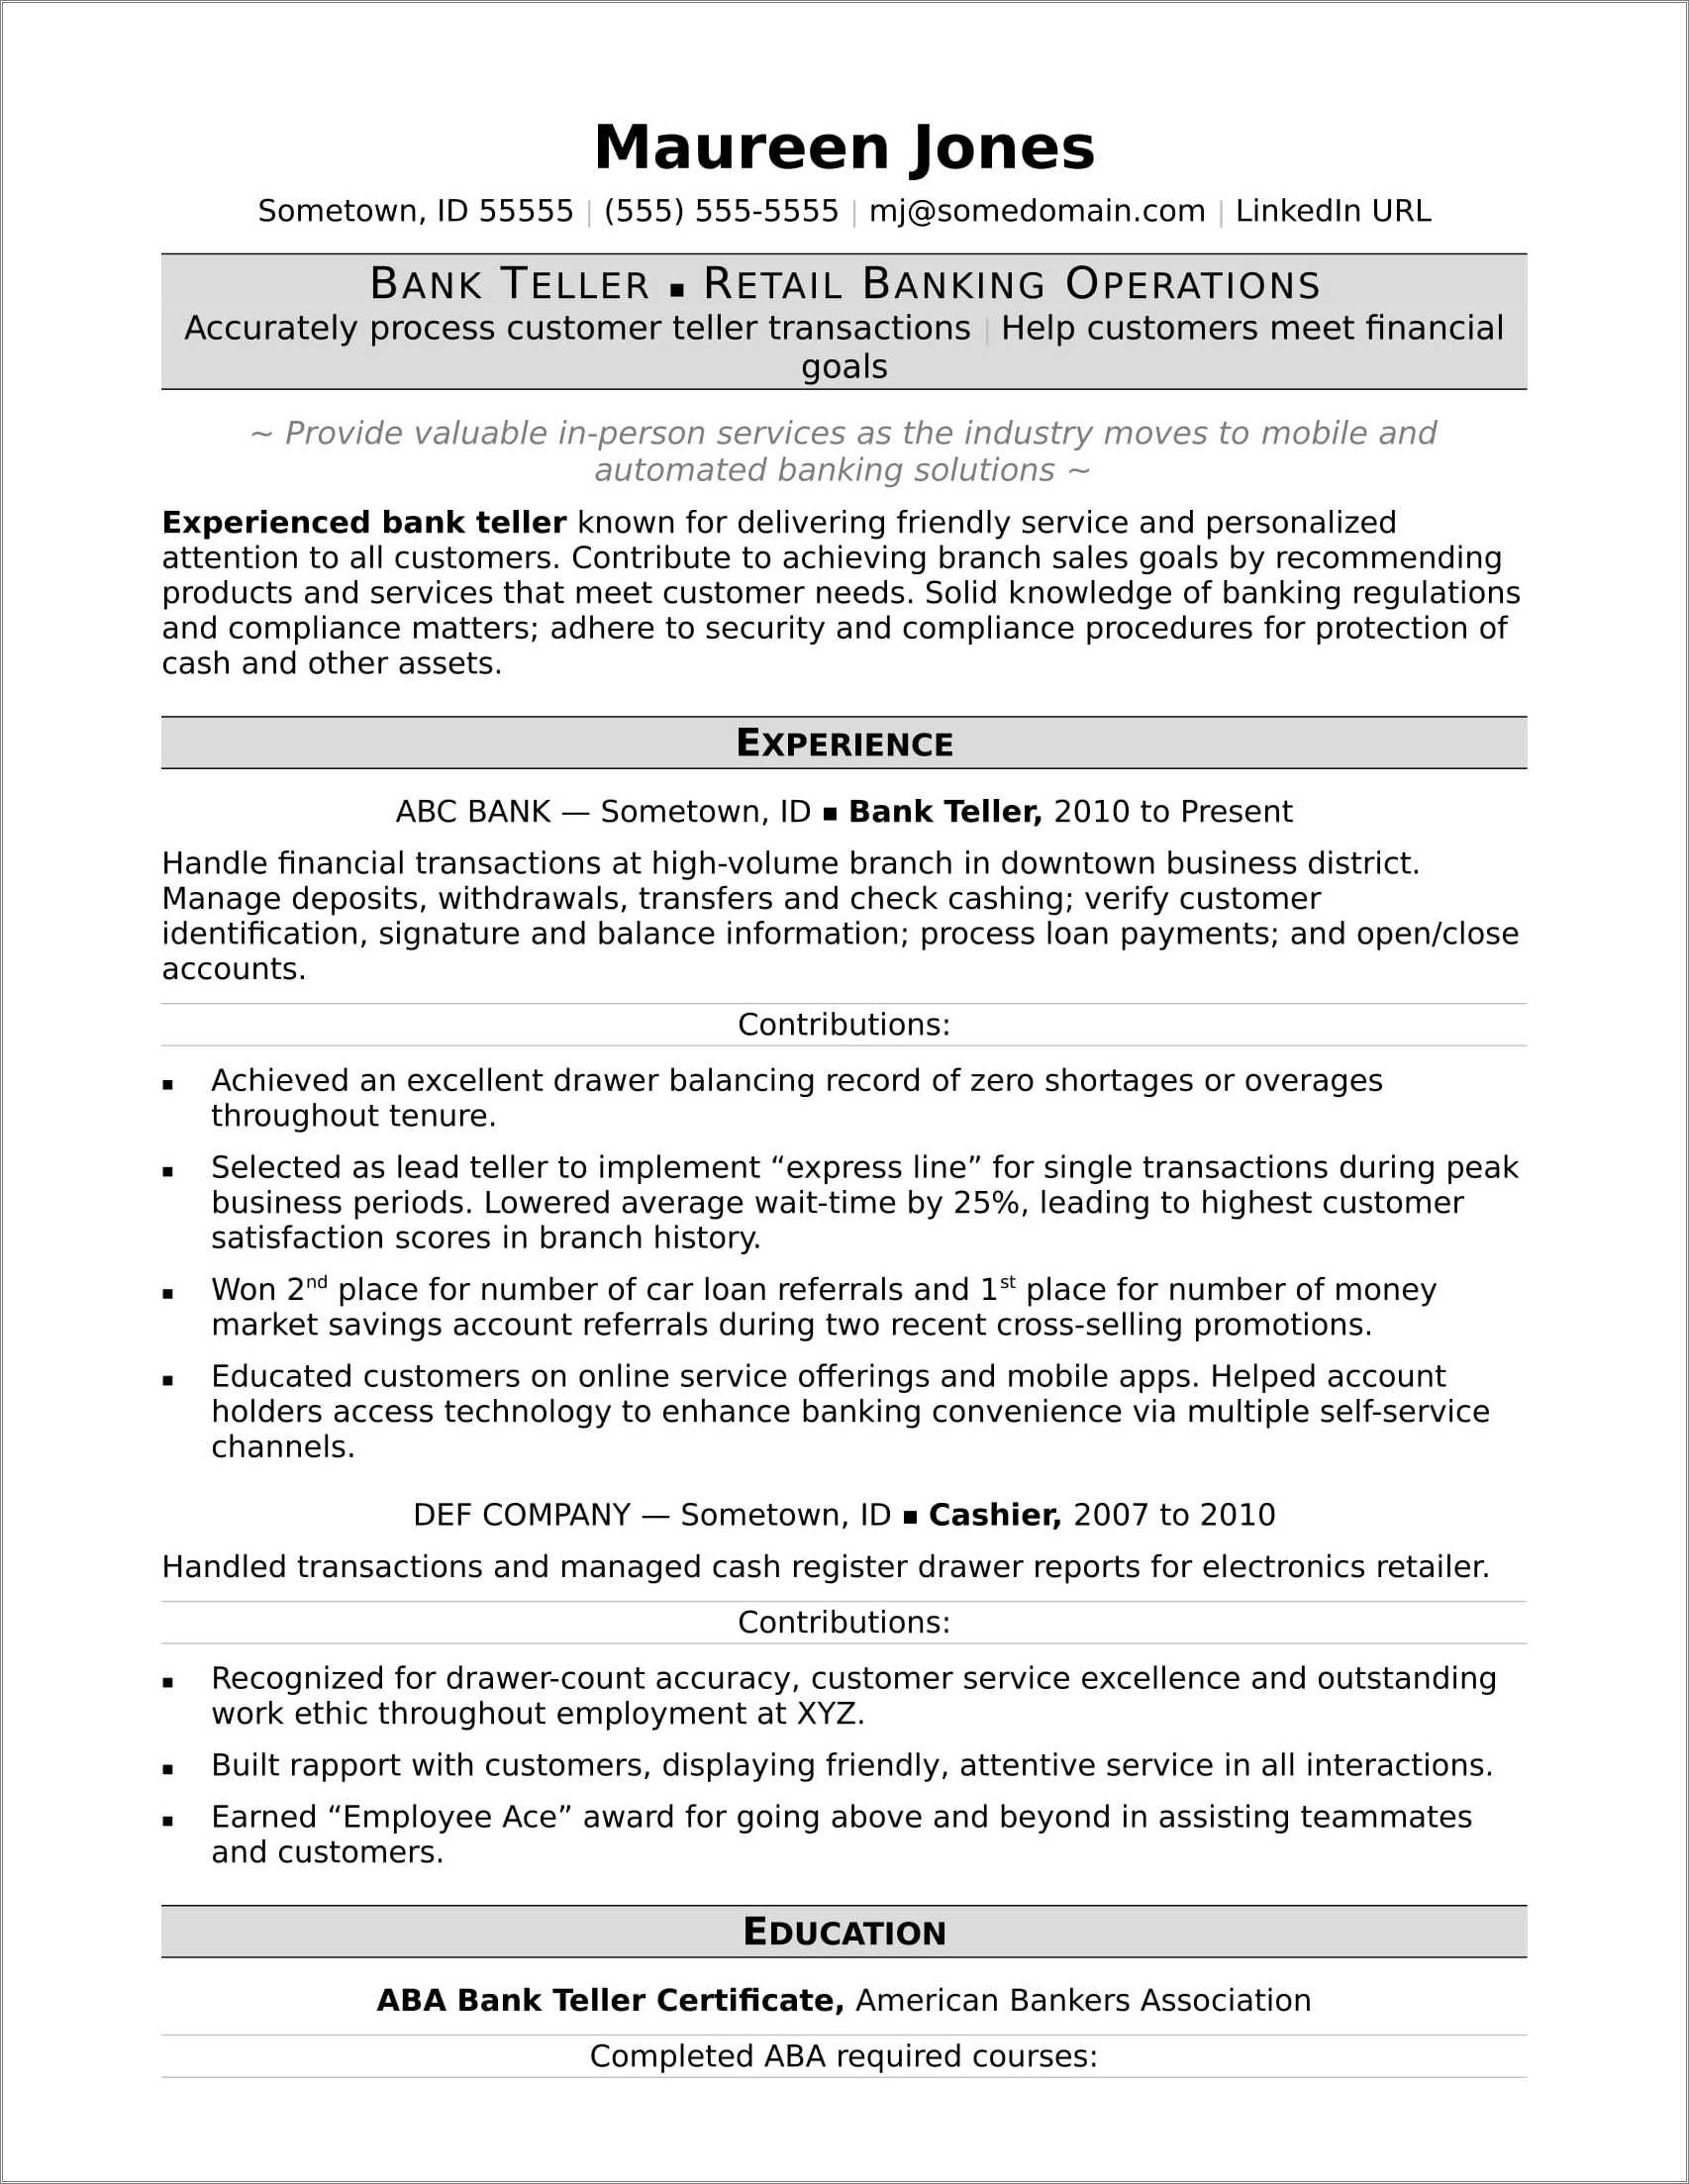 Personal Banker Best Experience Resume - Resume Example Gallery